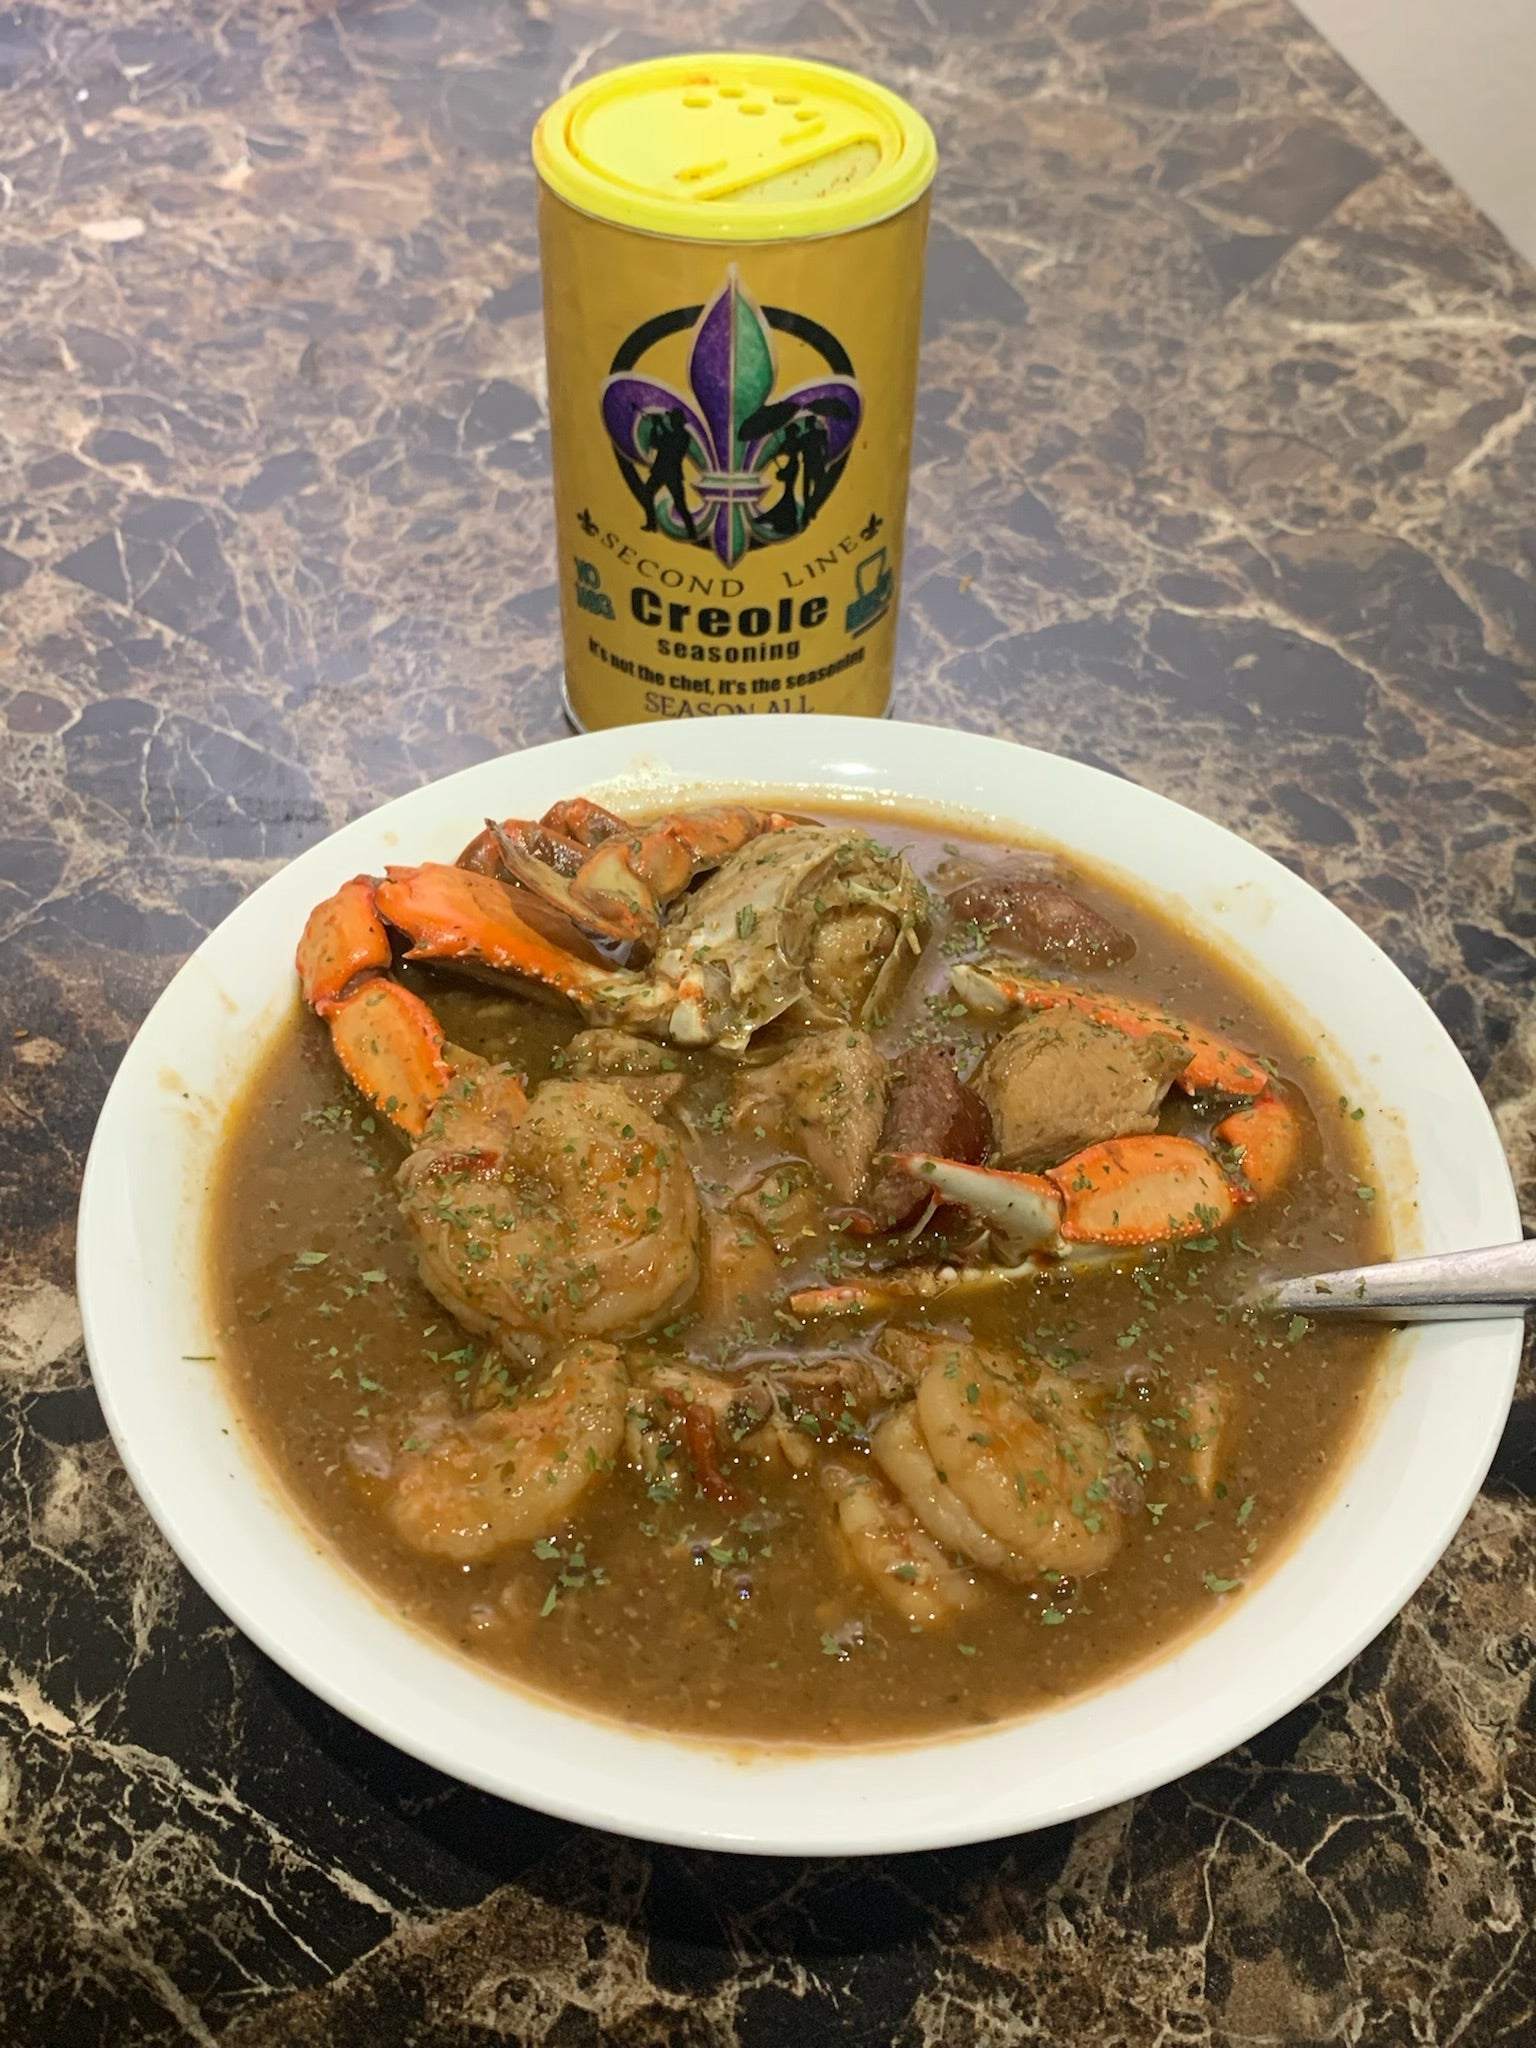 Season All 8lb – Second Line Creole Seasoning